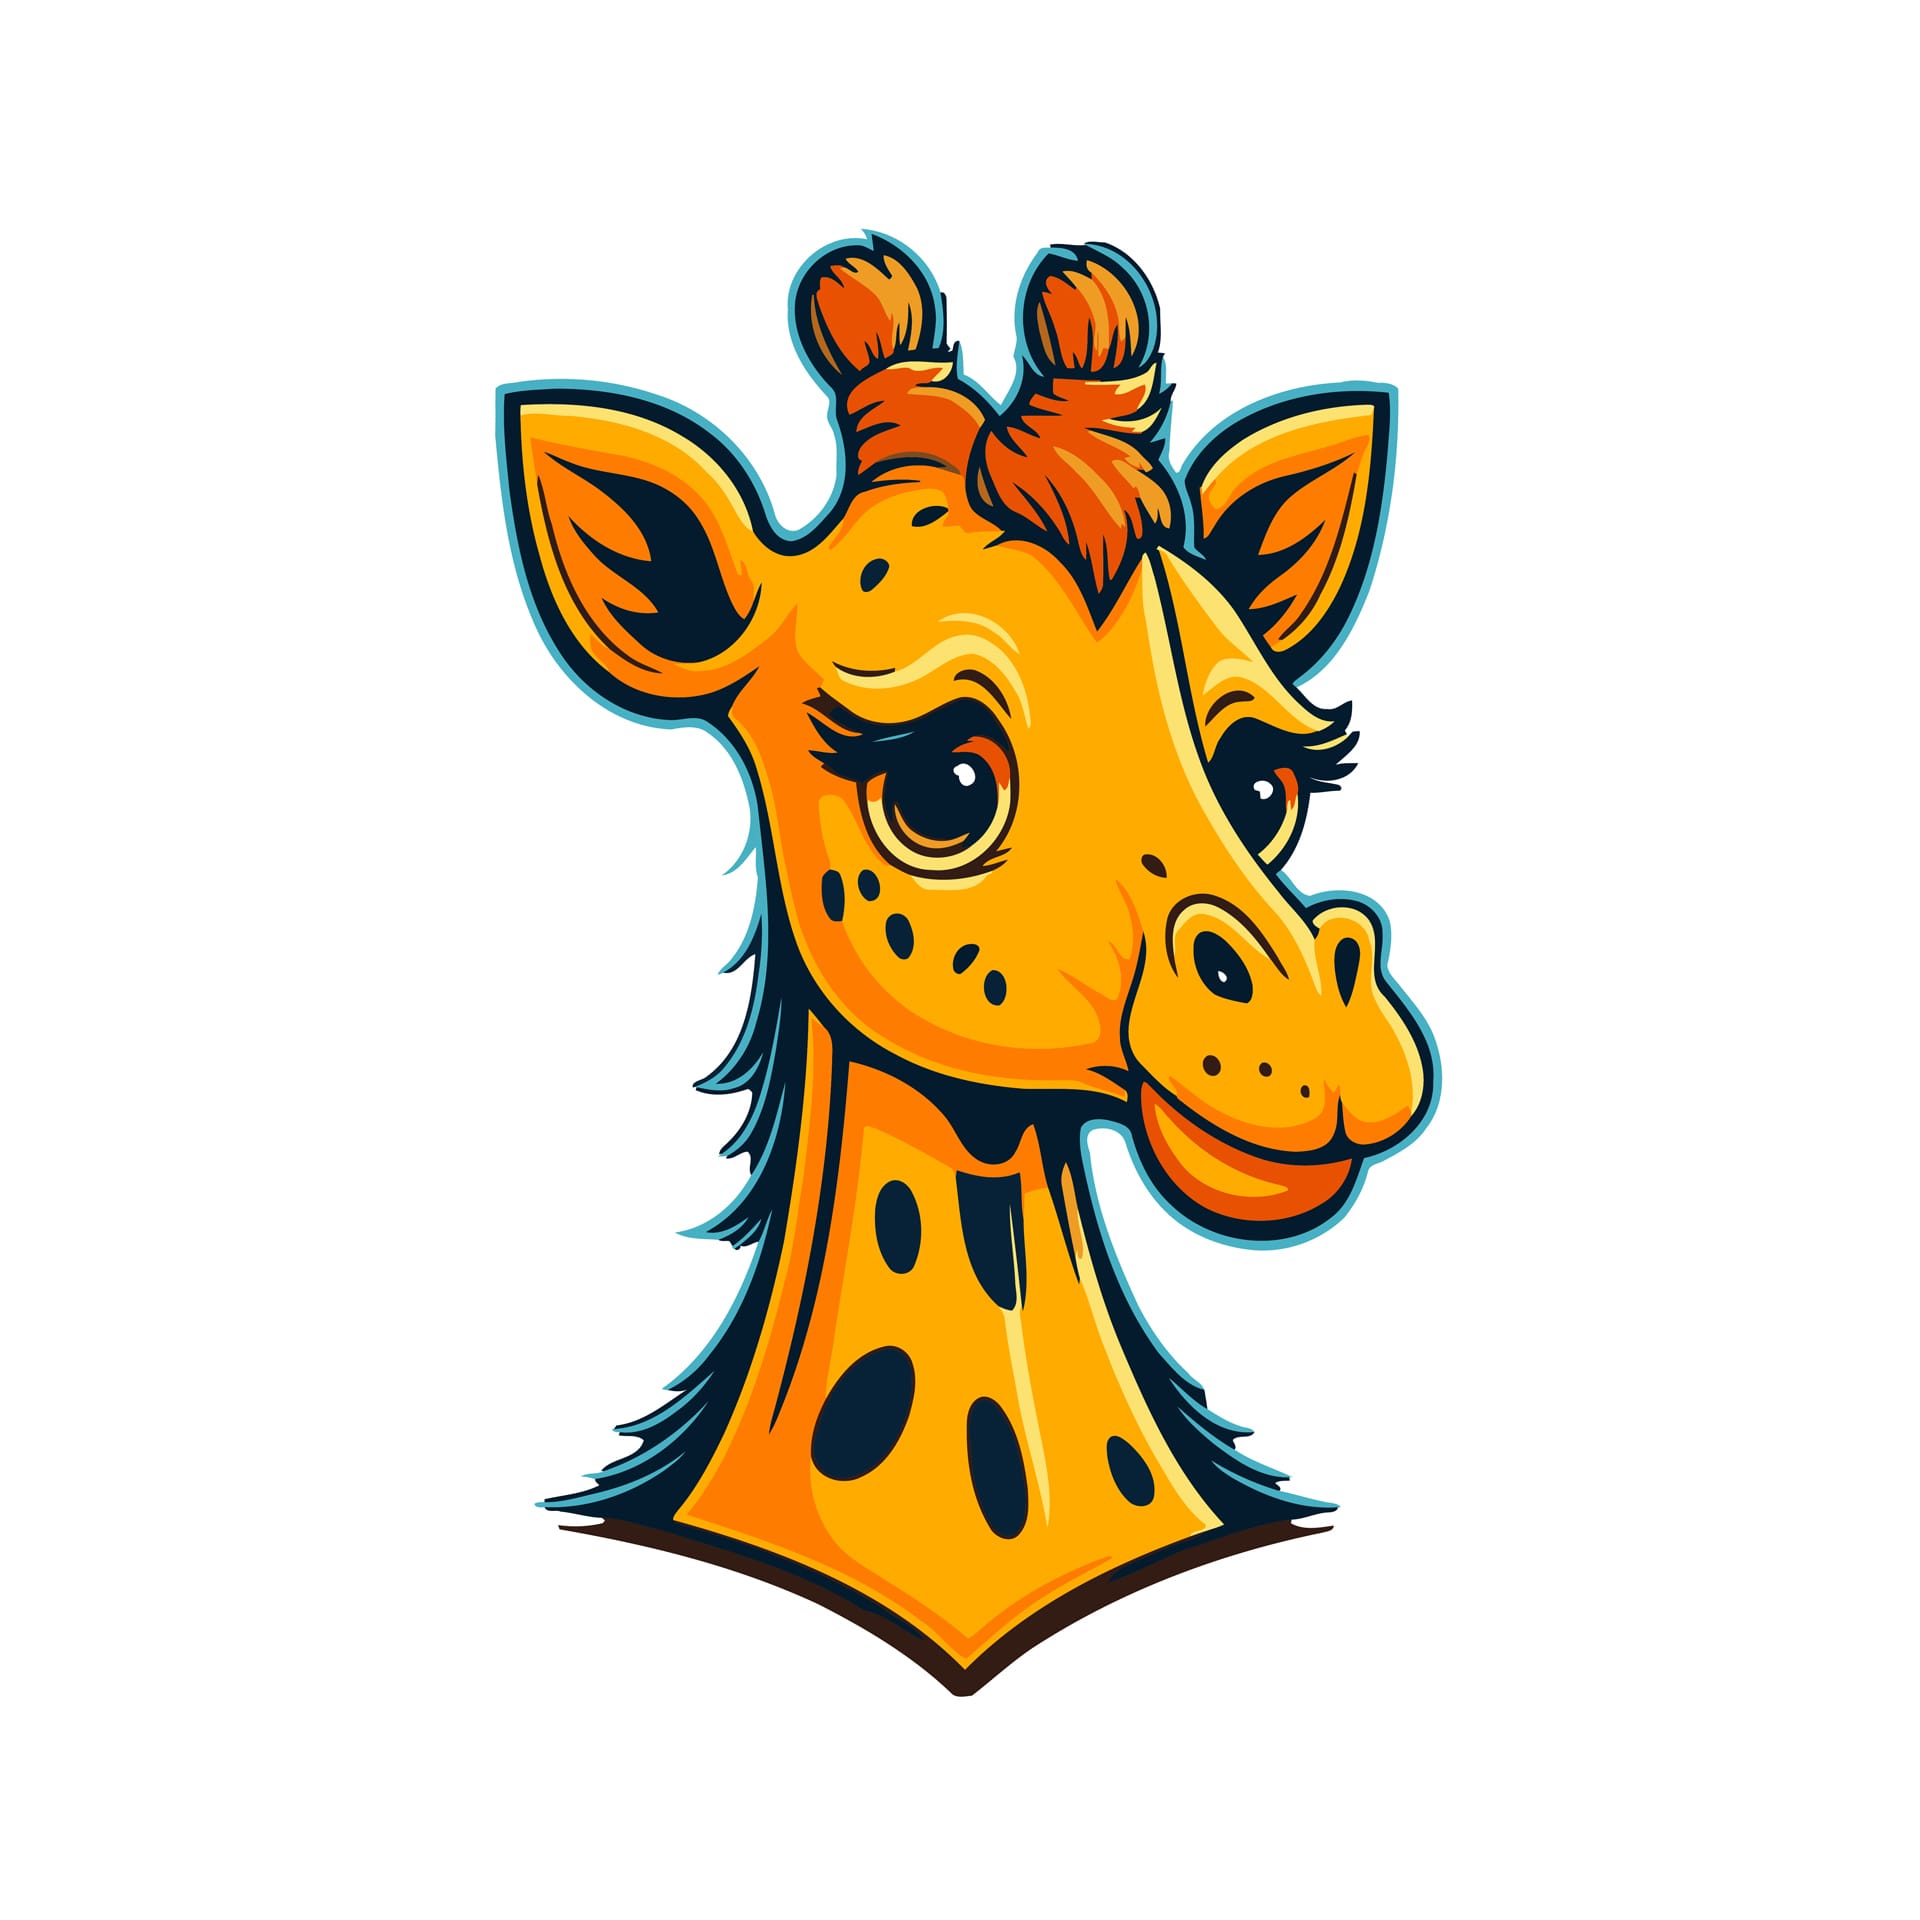 Giraffe logo animal character logo mascot cartoon design template picture